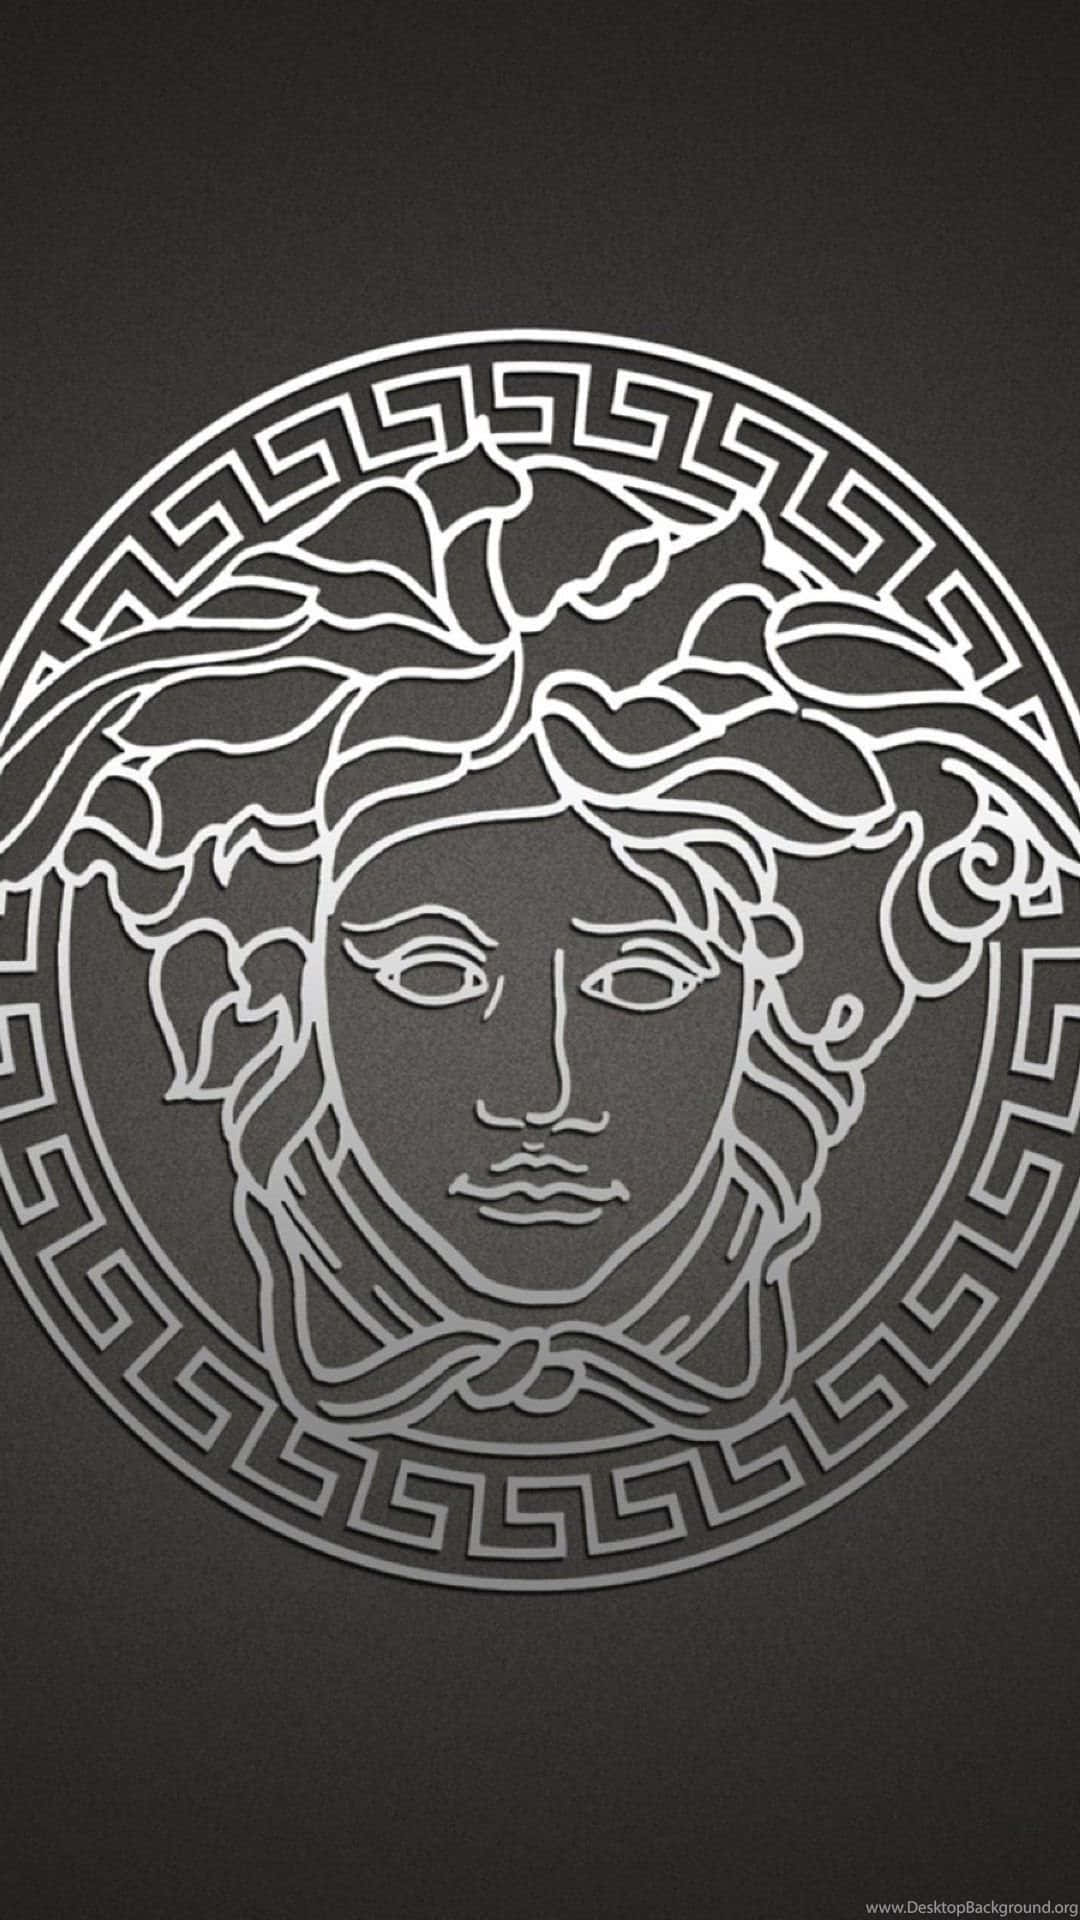 A White And Black Design Of A Medusa Head